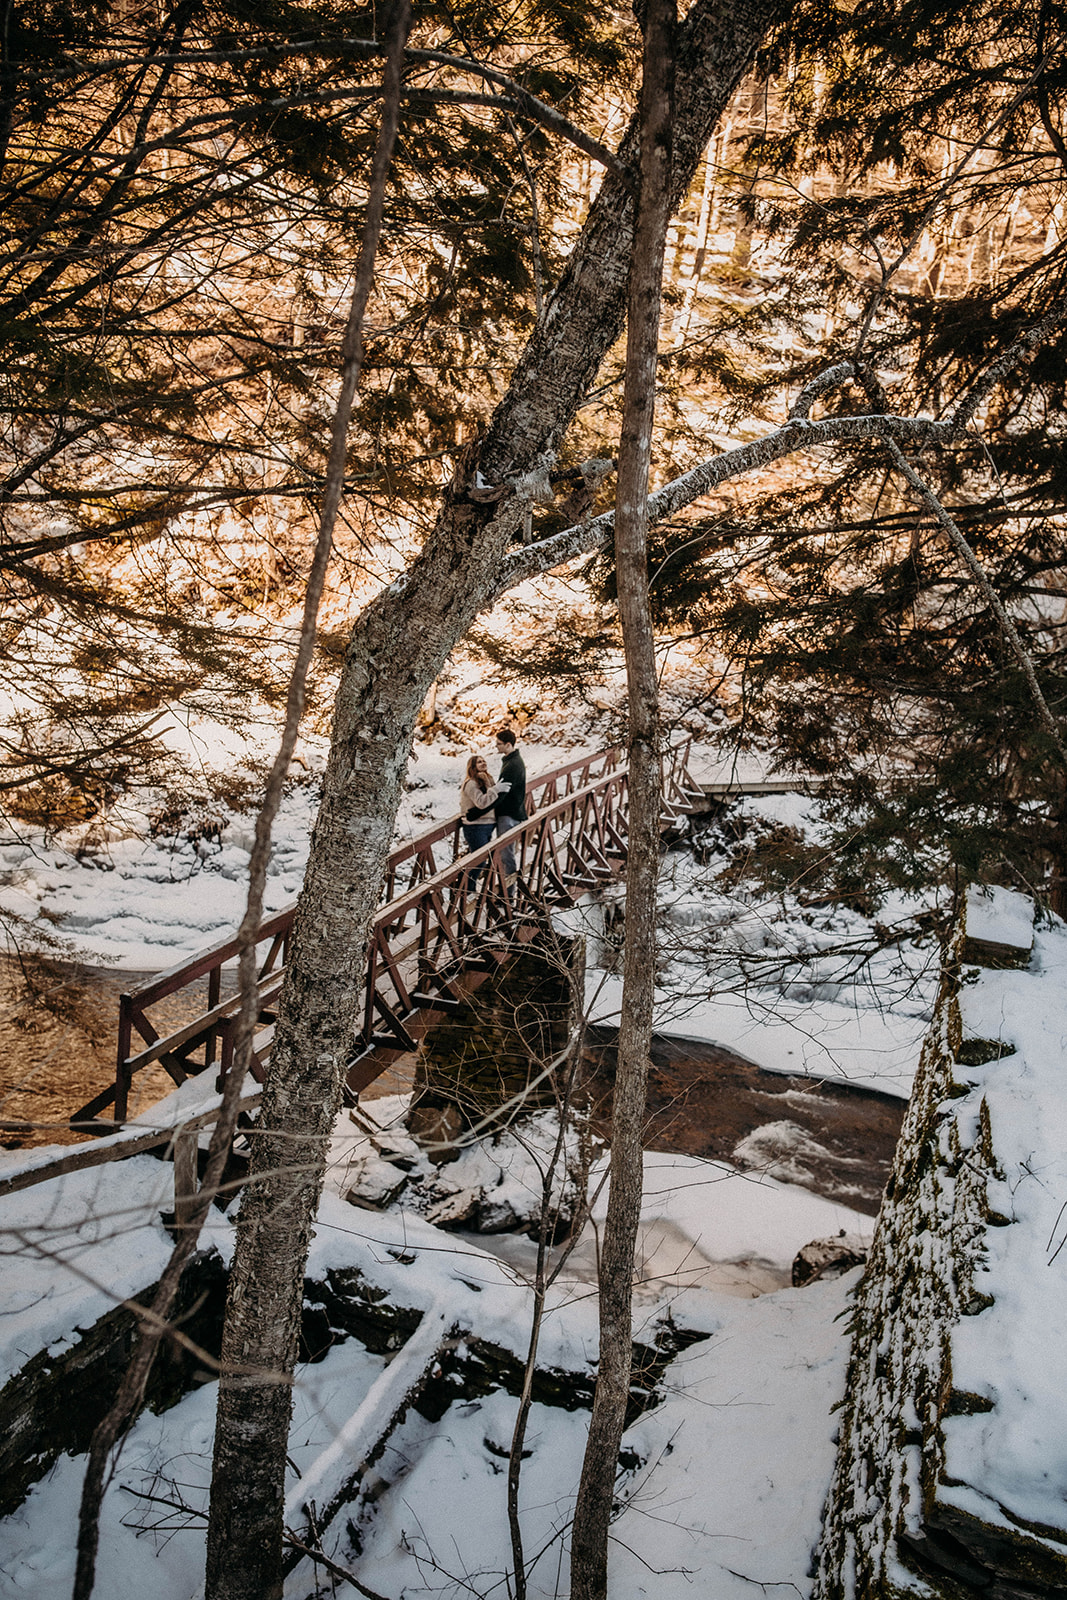 Stunning snowy winter bridge engagement photos at Huyck preserve in Rensselaerville New York!